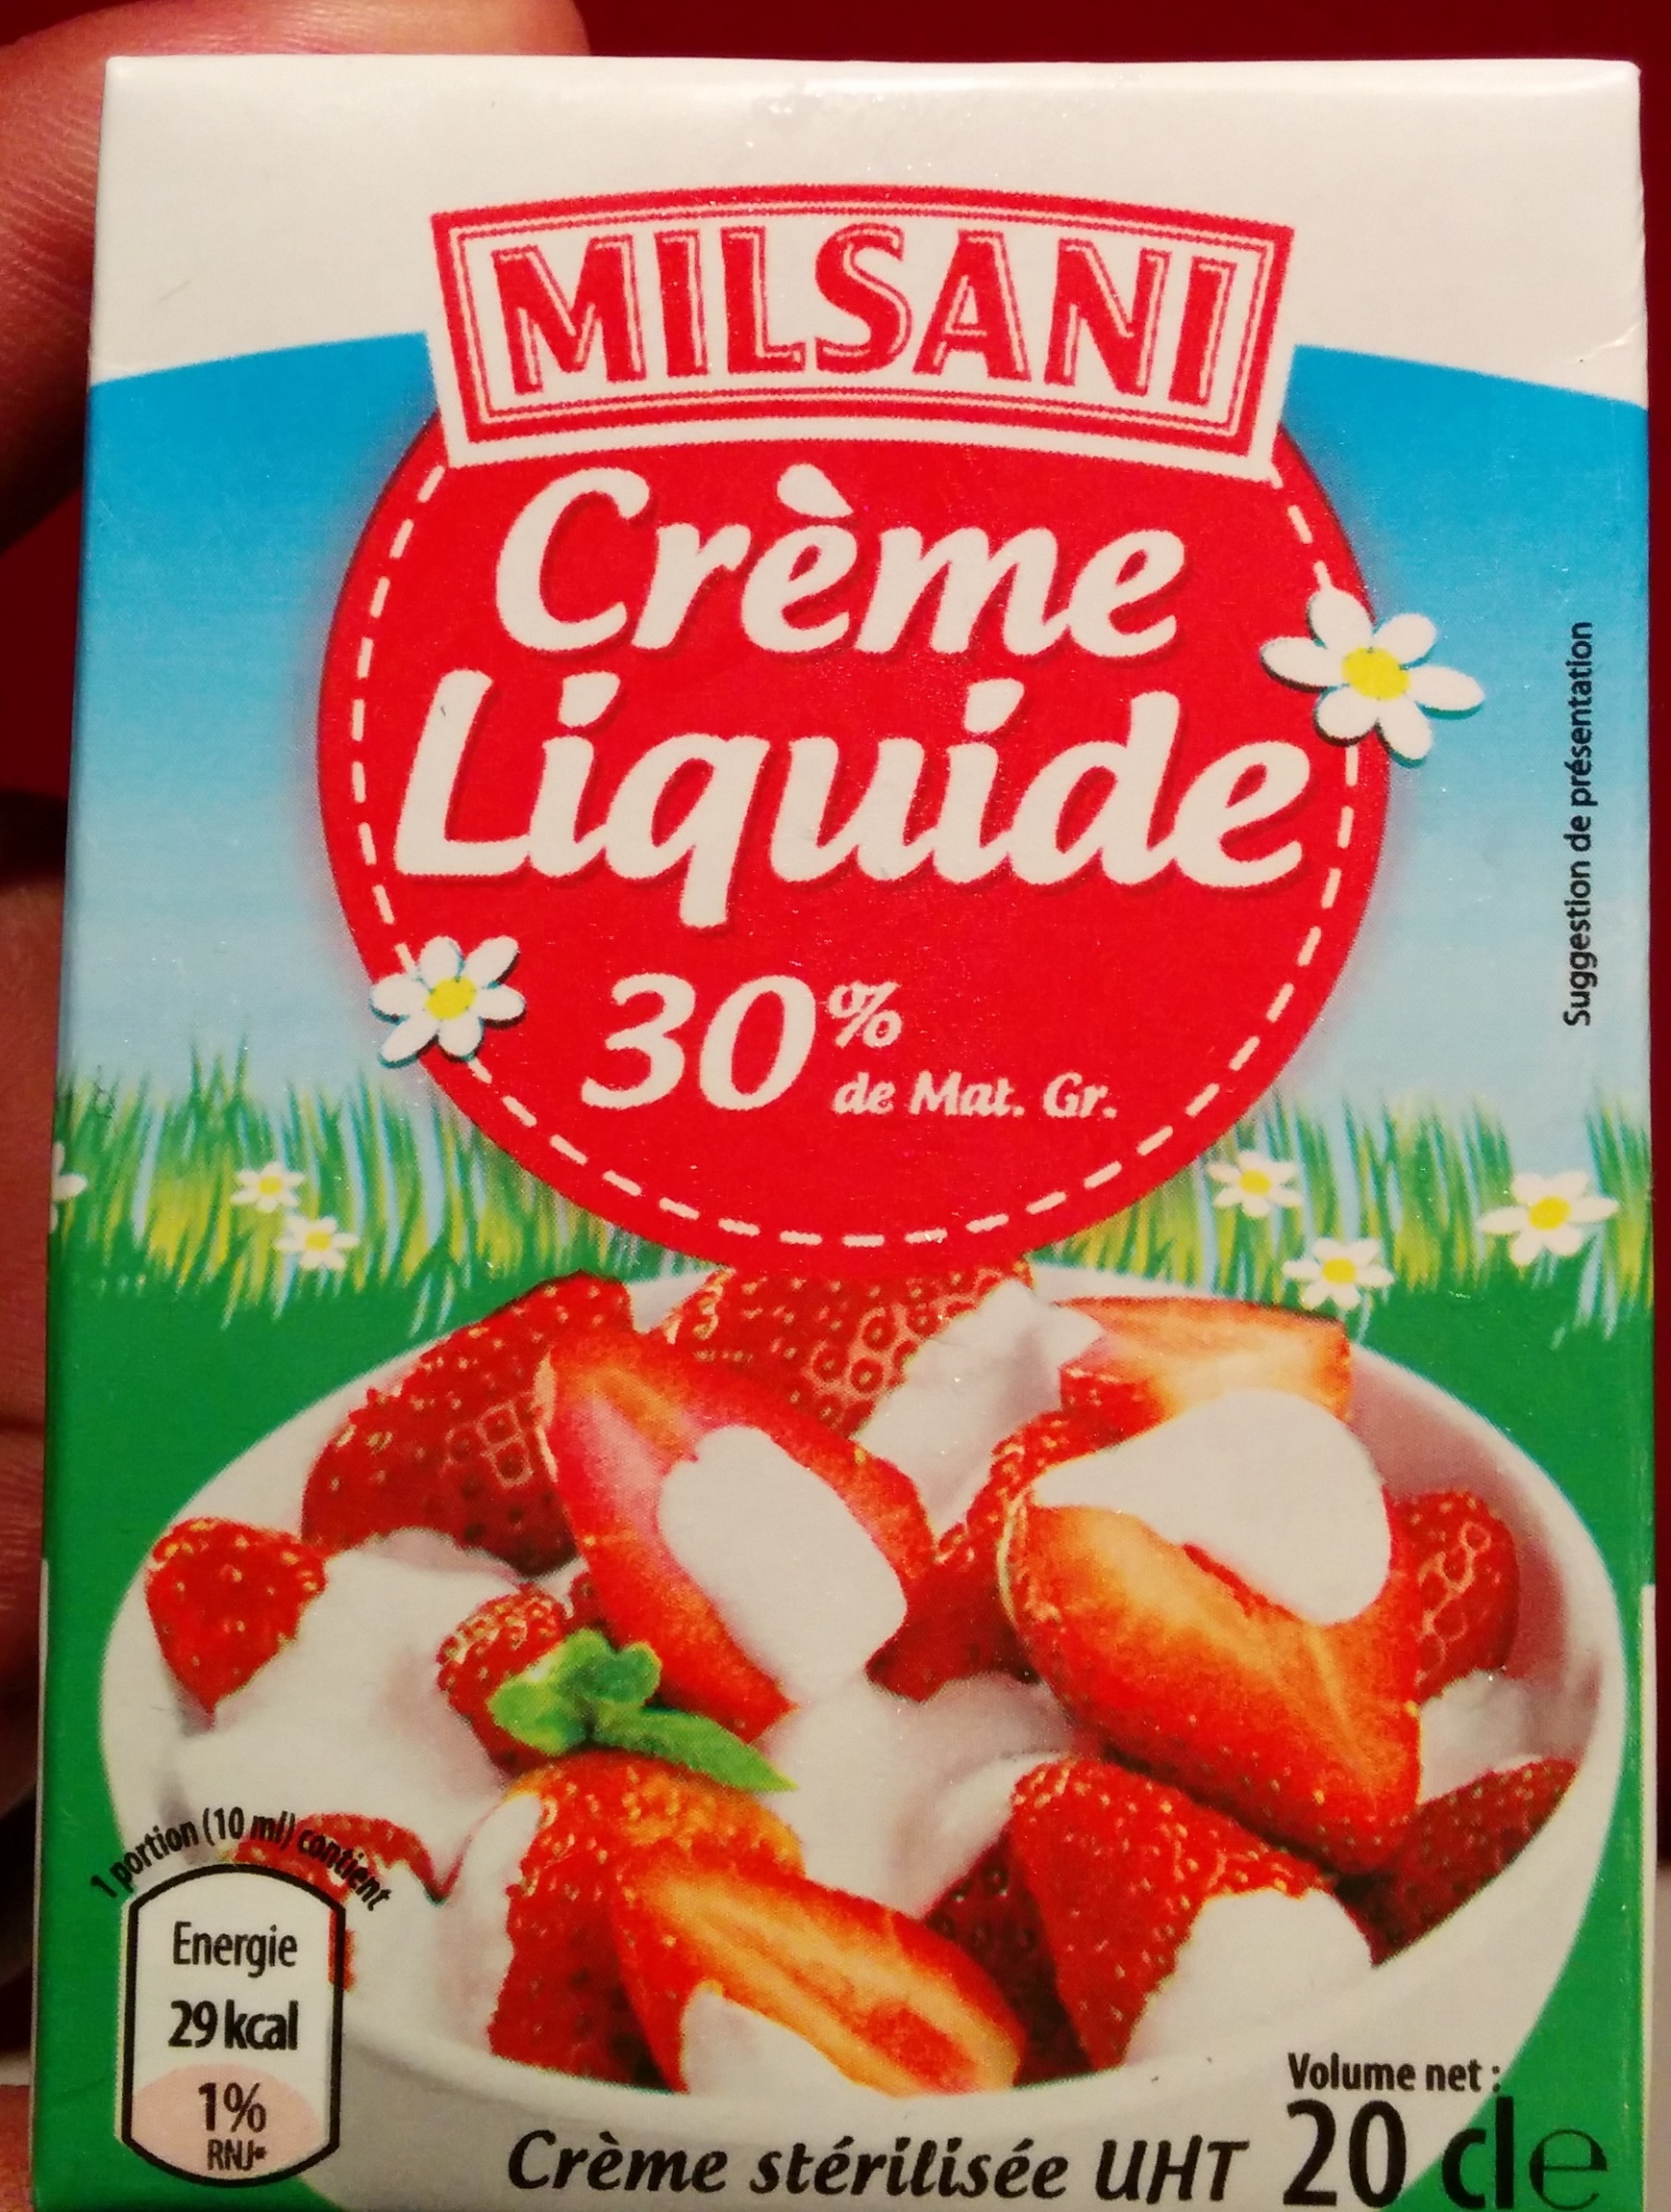 Creme liquide 30% - Product - fr